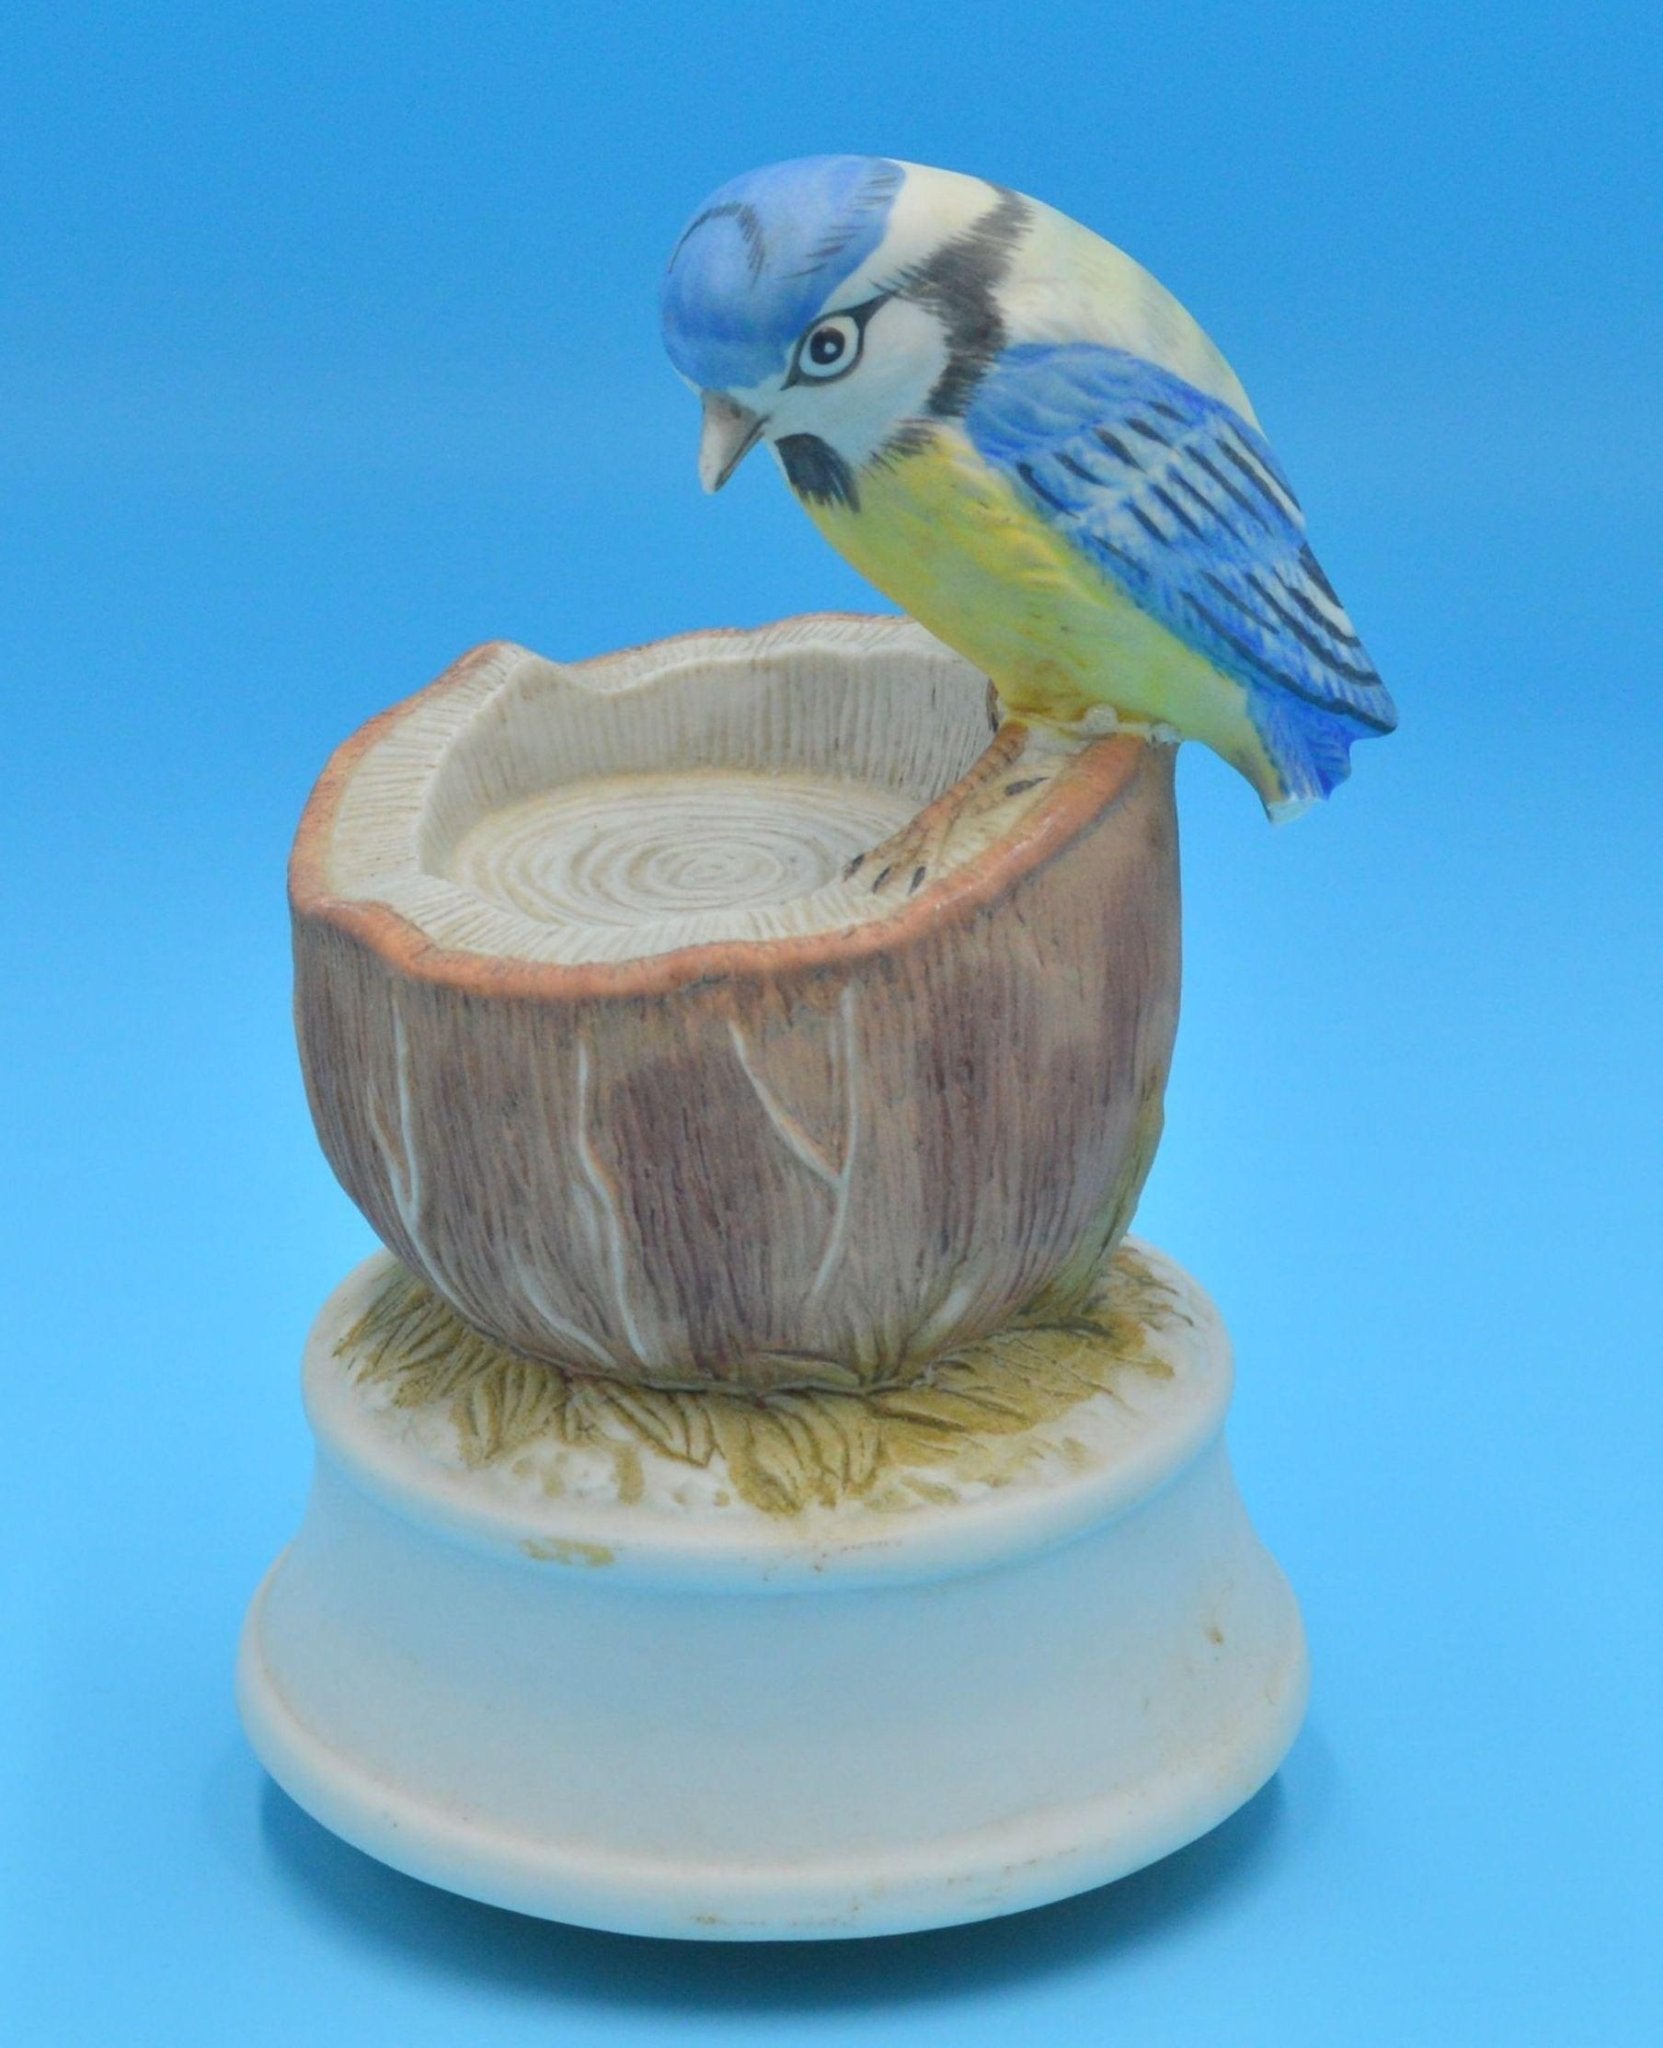 BIRD FIGURINE J.B.G. MUSICAL BLUE TIT ORNAMENT PLAYS MY WAY - TMD167207